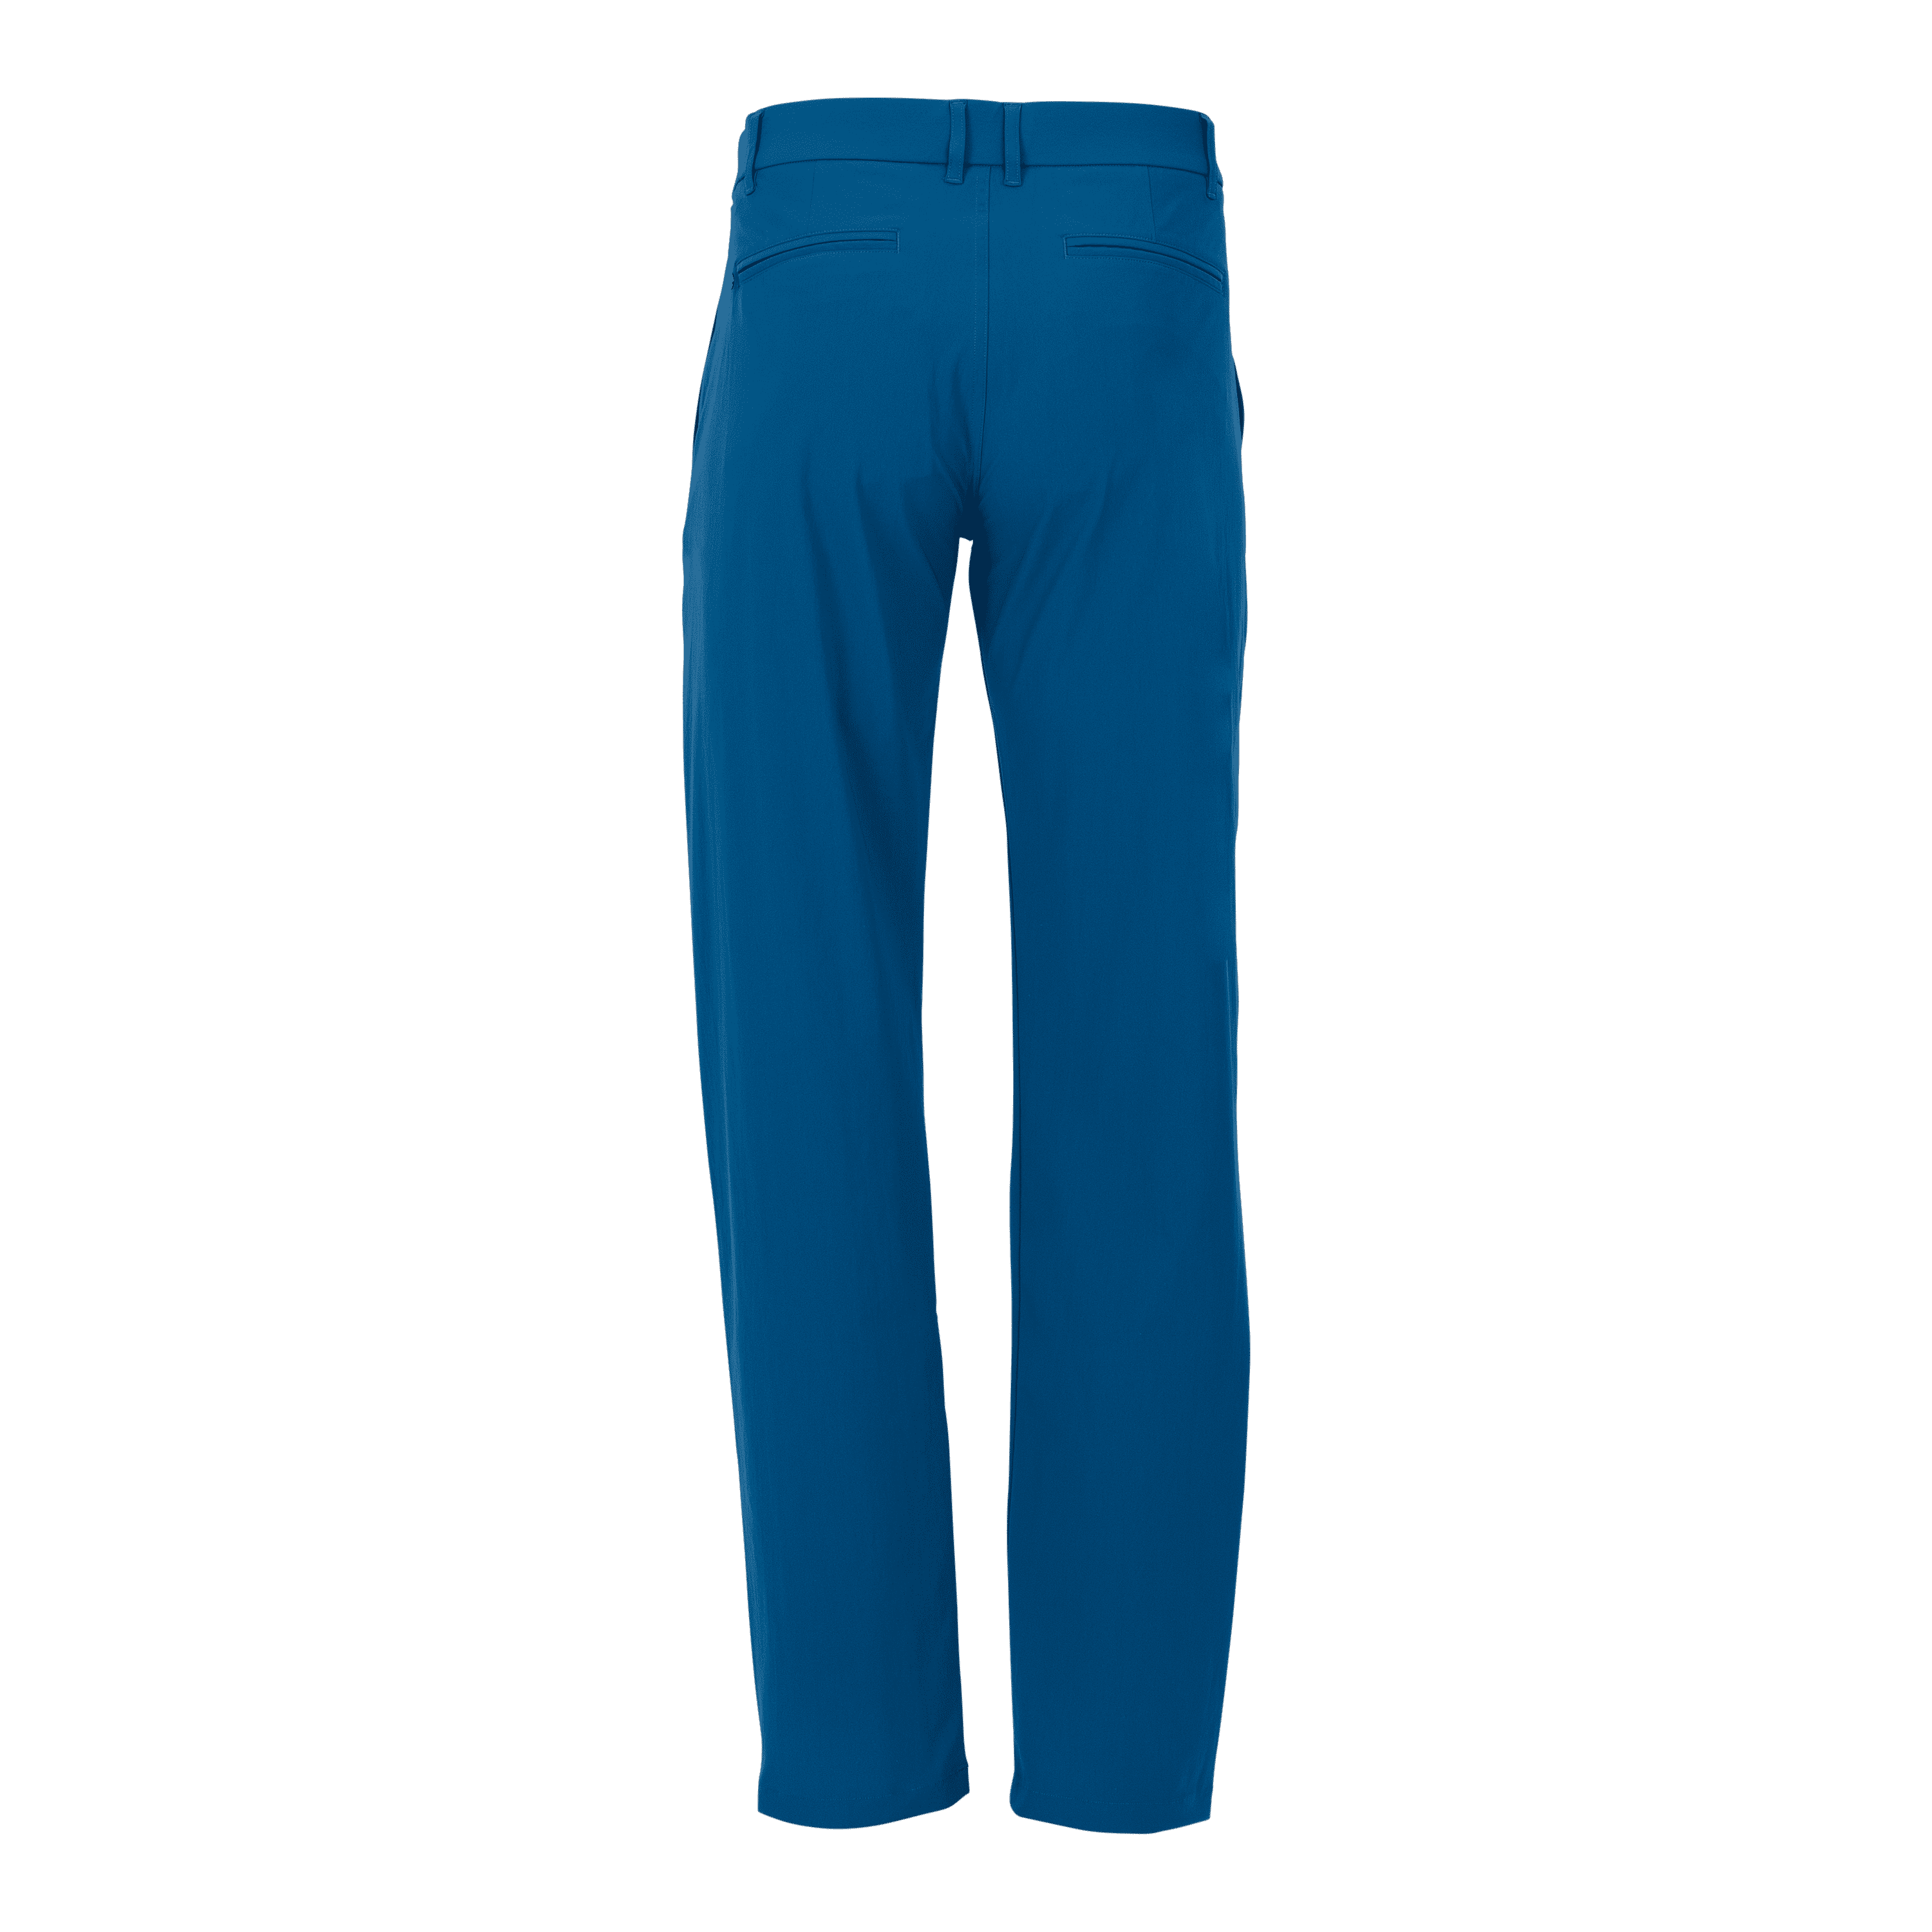 Guvpev Linen Clothing For Men Natural Linen Pants For Men Contemporary  Comfortable Quality Soft Linen Pocket Color Trousers - Light blue XXXXL -  Walmart.com